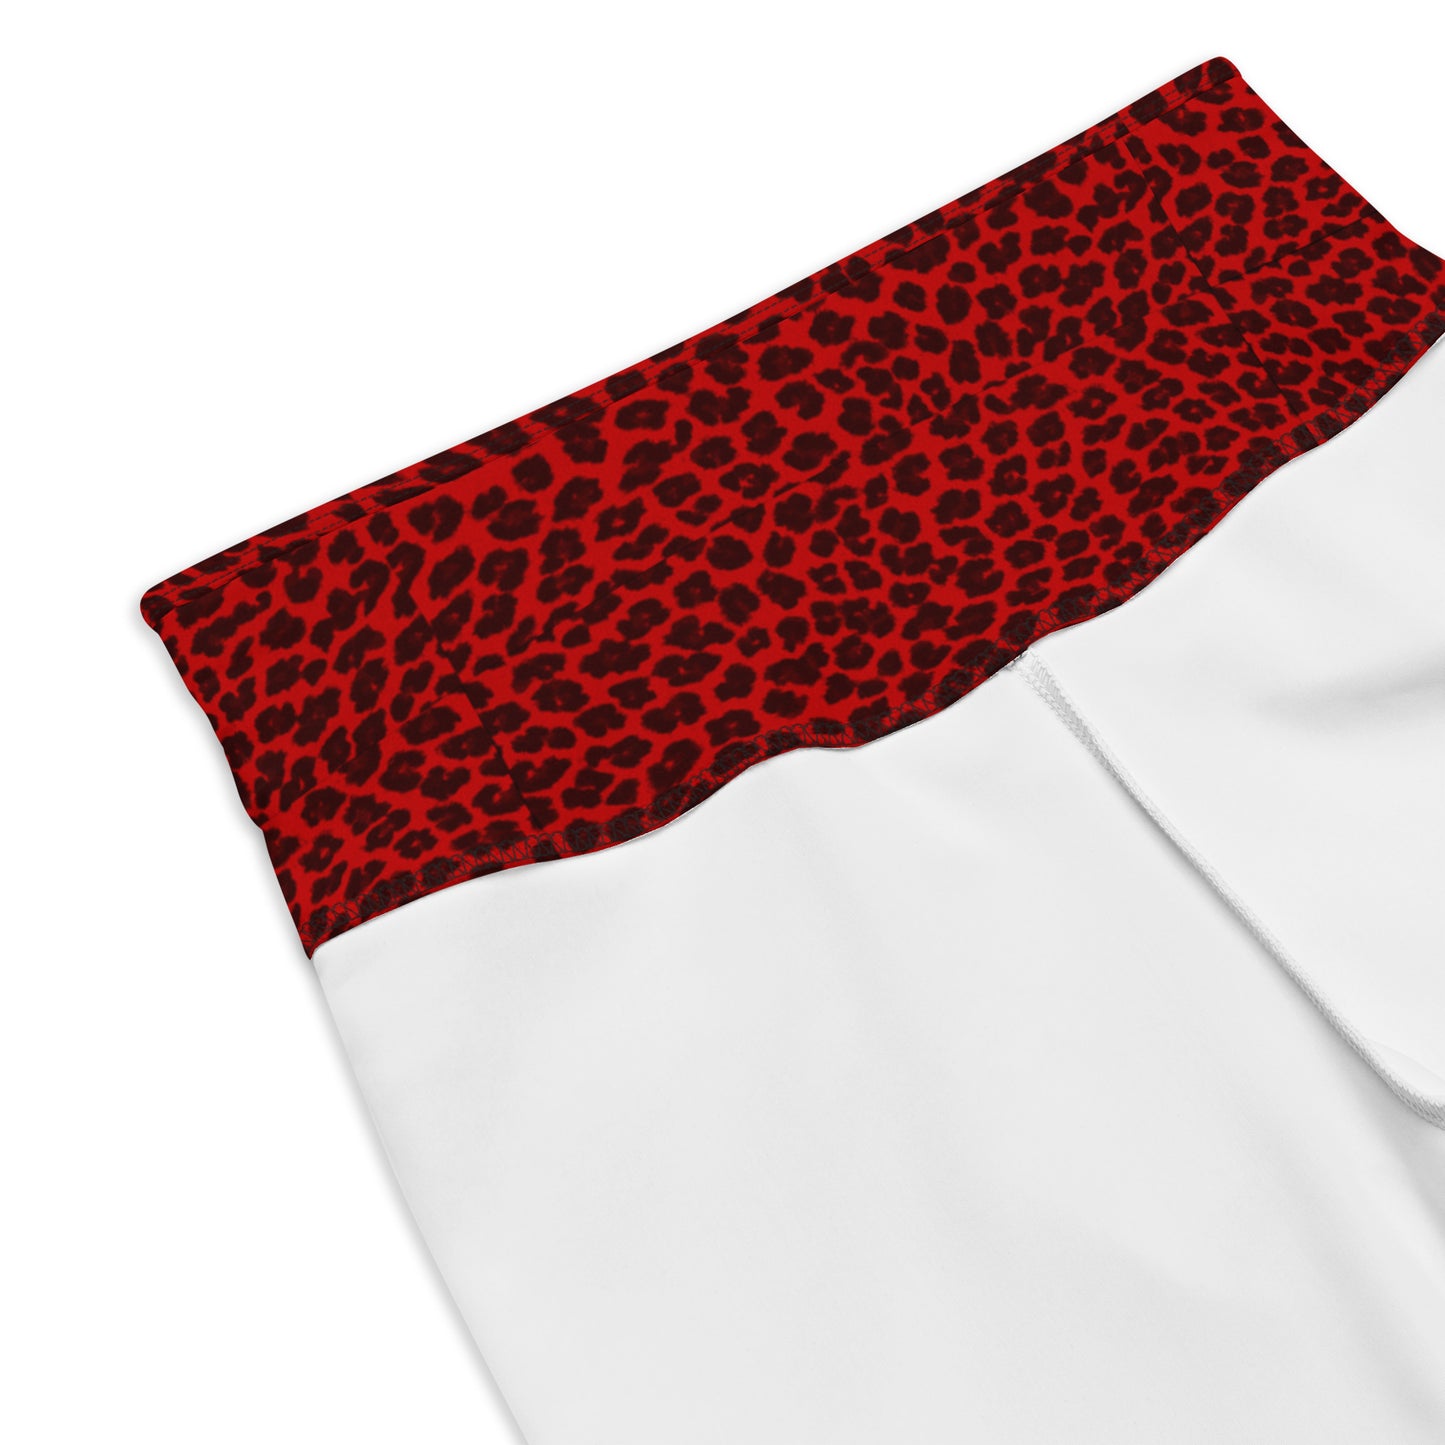 Sixty Eight 93 Logo White Cheetah Red Biker Shorts